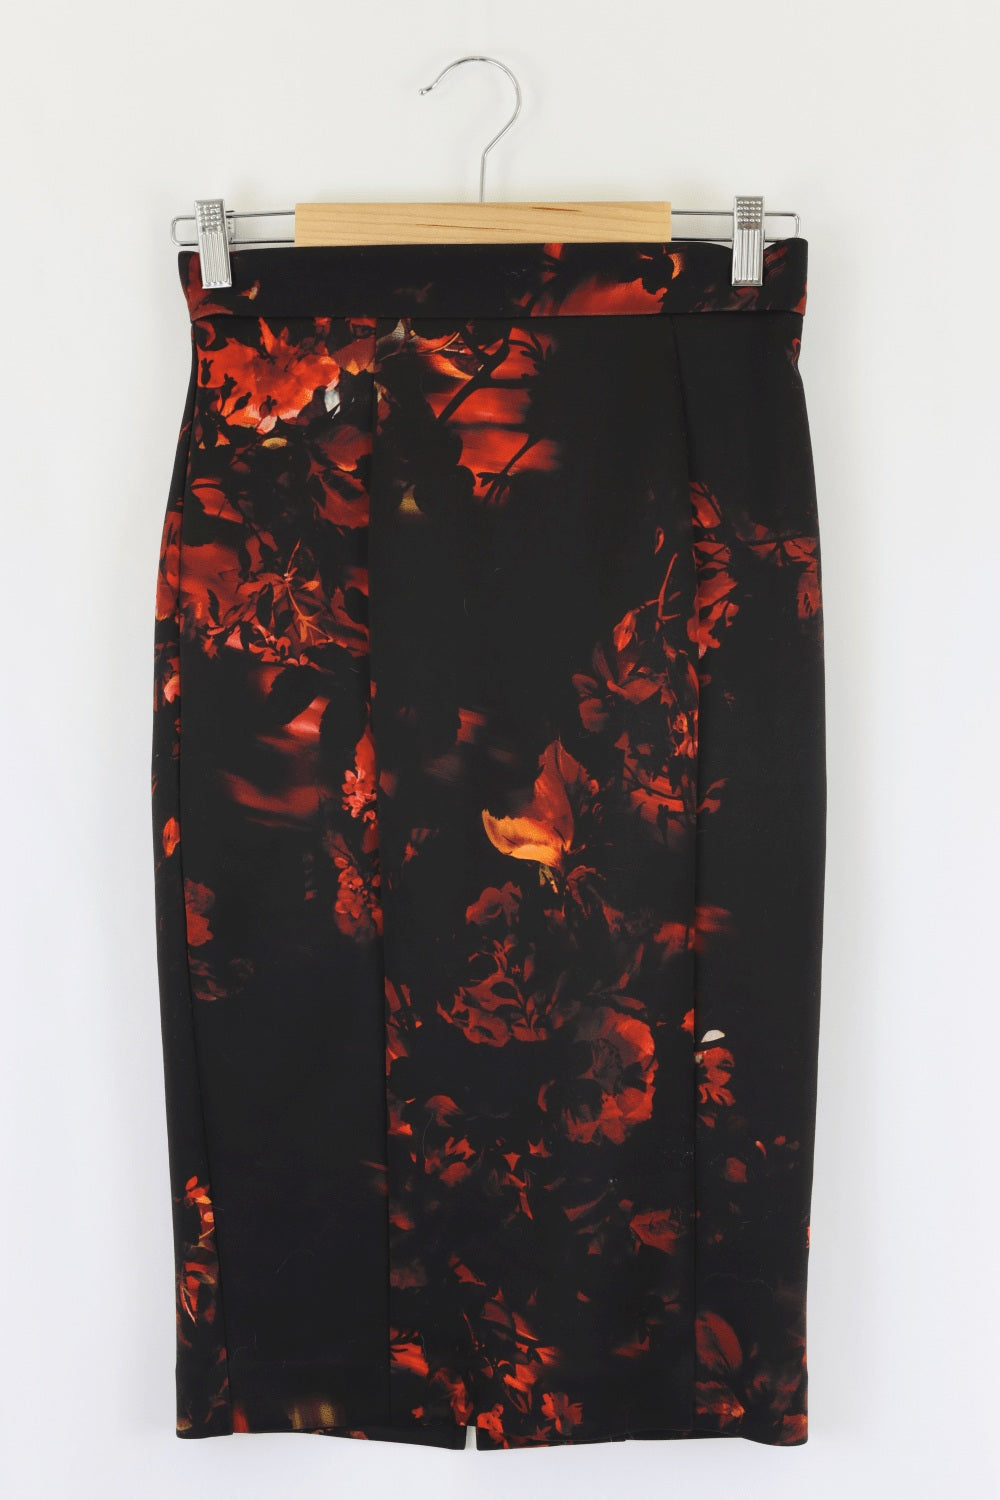 Cue Black Floral Orange Skirt 8